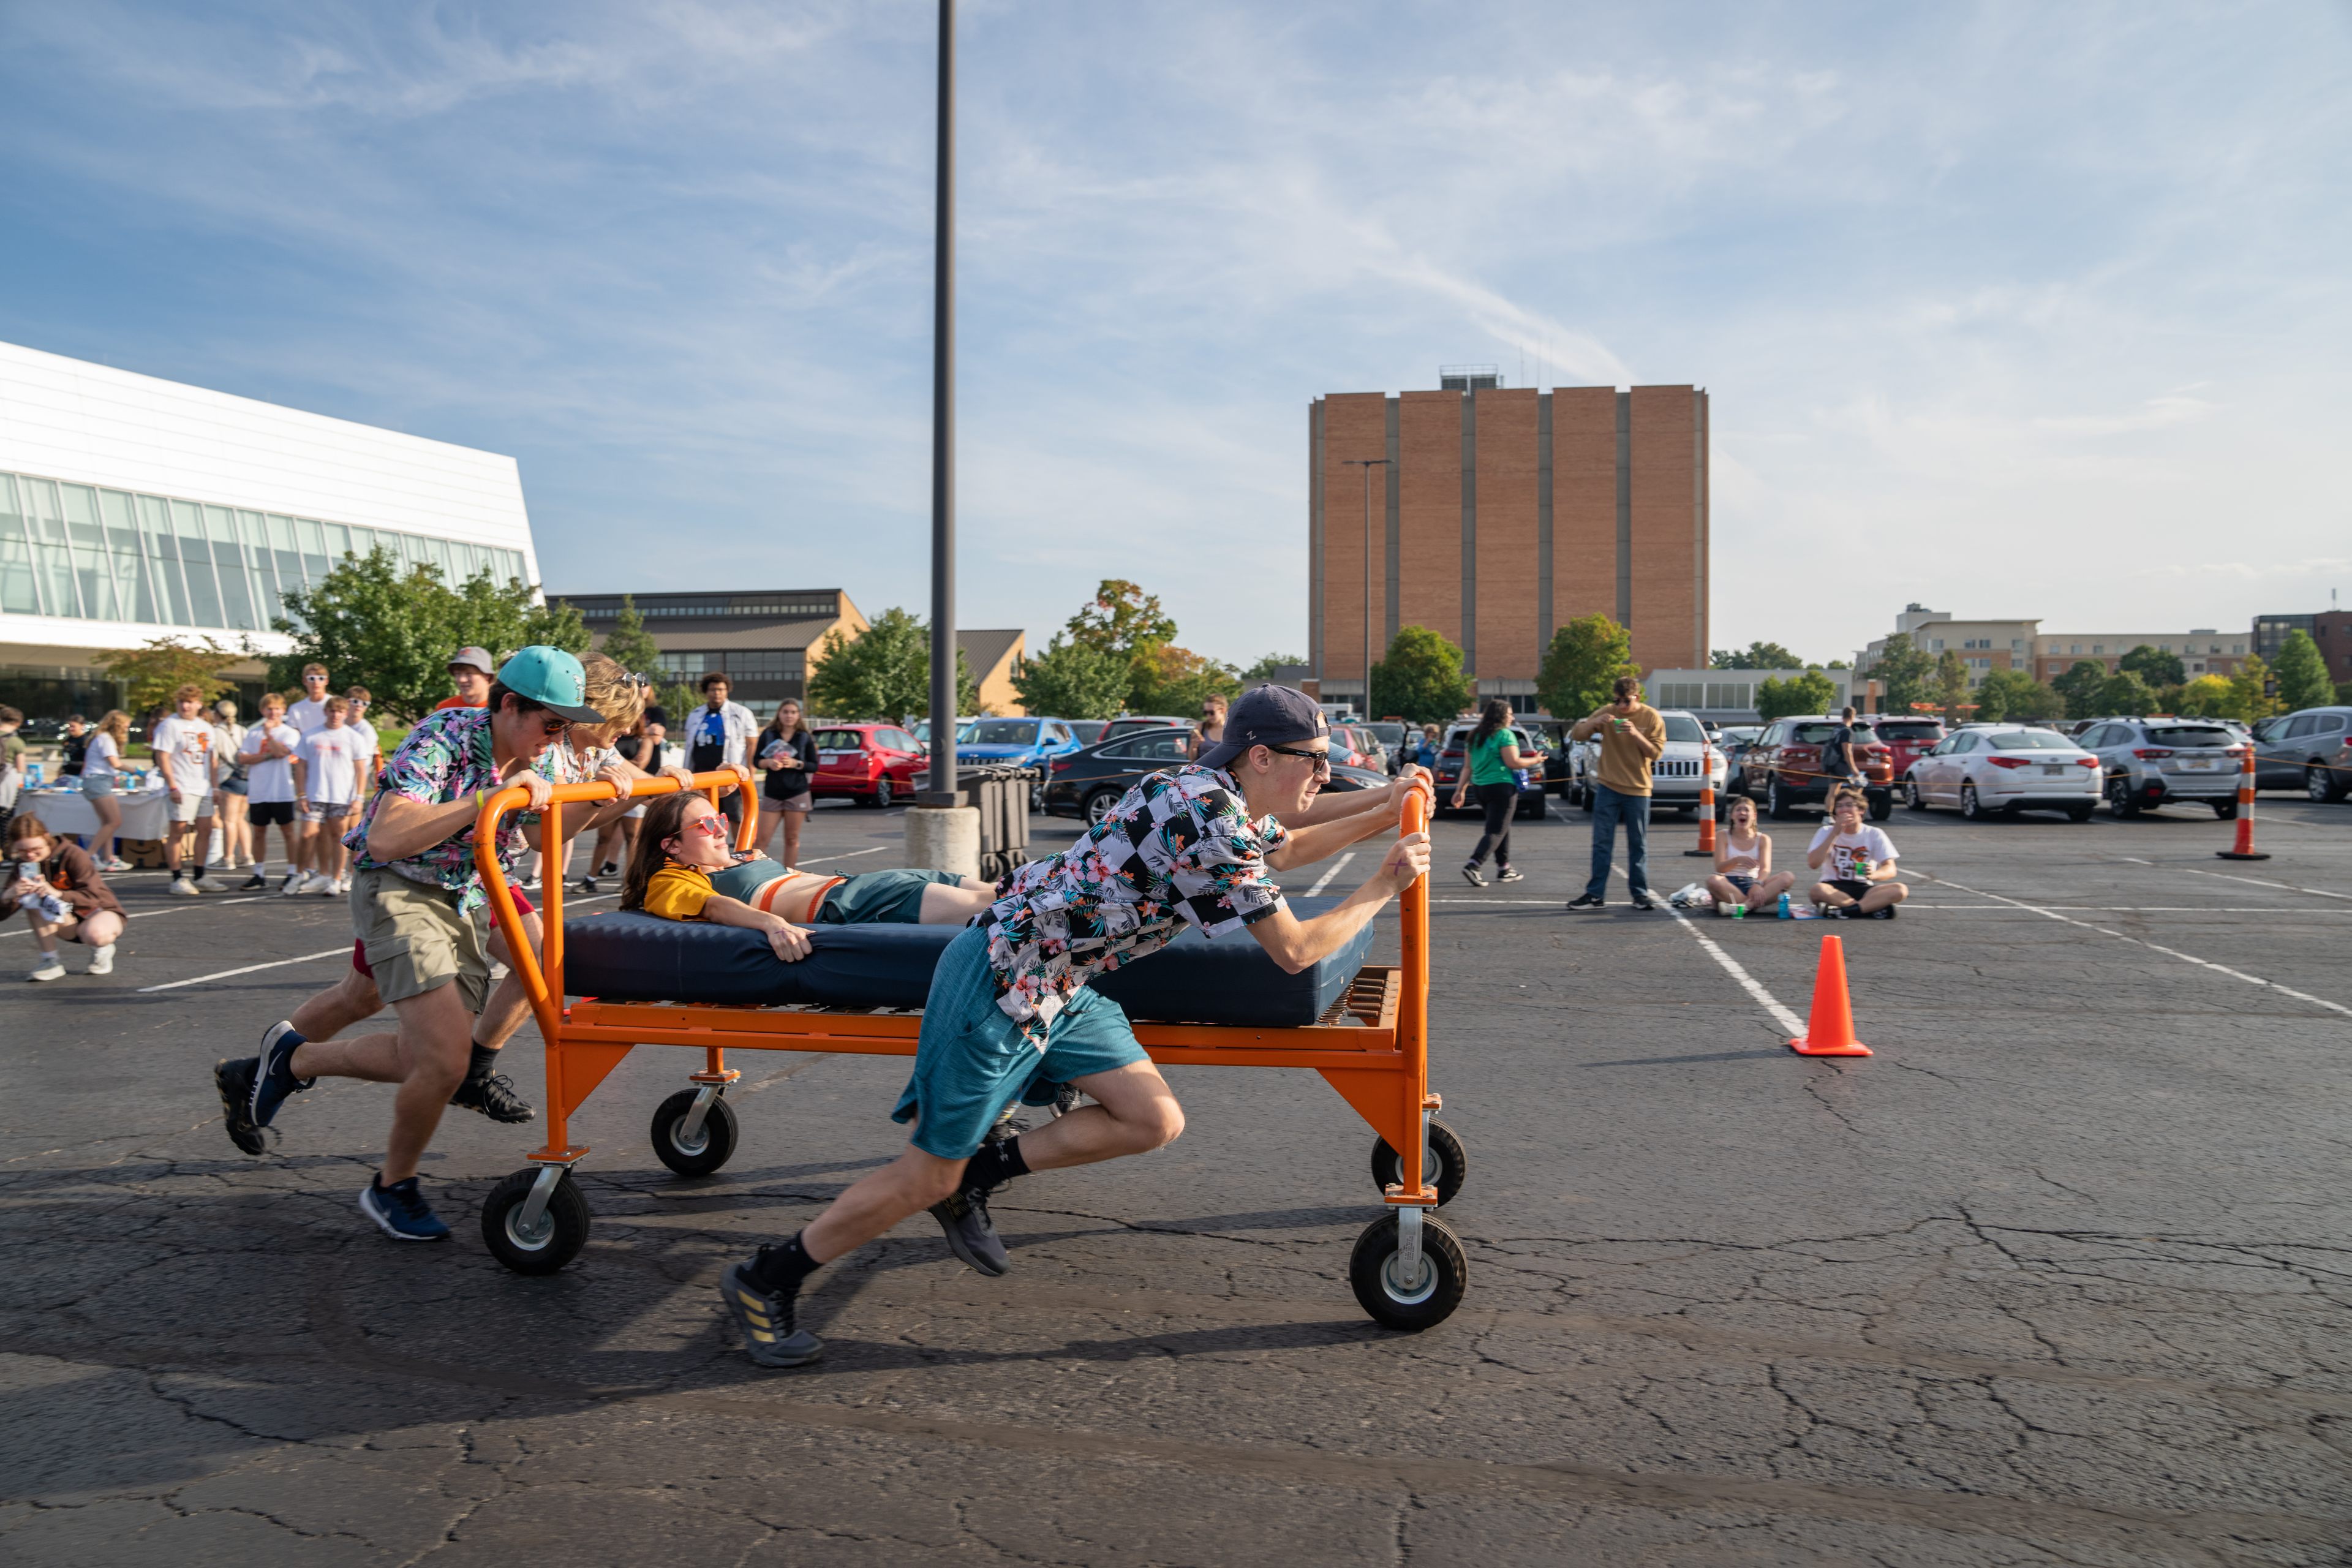 BGSU Students rolling on cart on campus